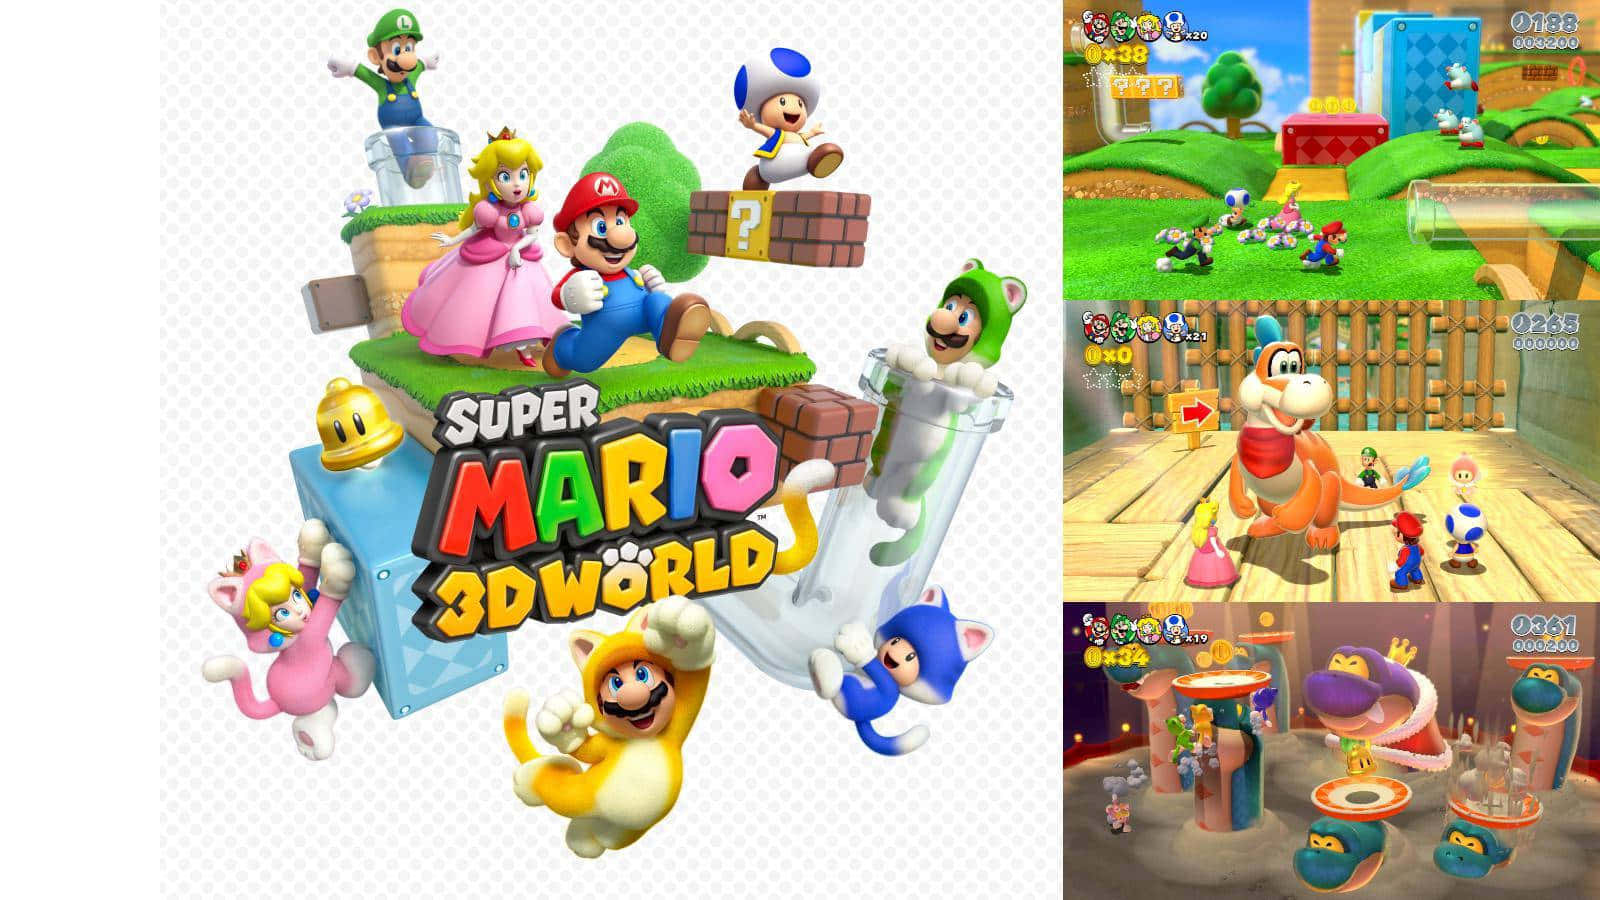 SupersMario 3D World - Nintendo Nintendo Nintendo Nintendo Nintendo Wallpaper